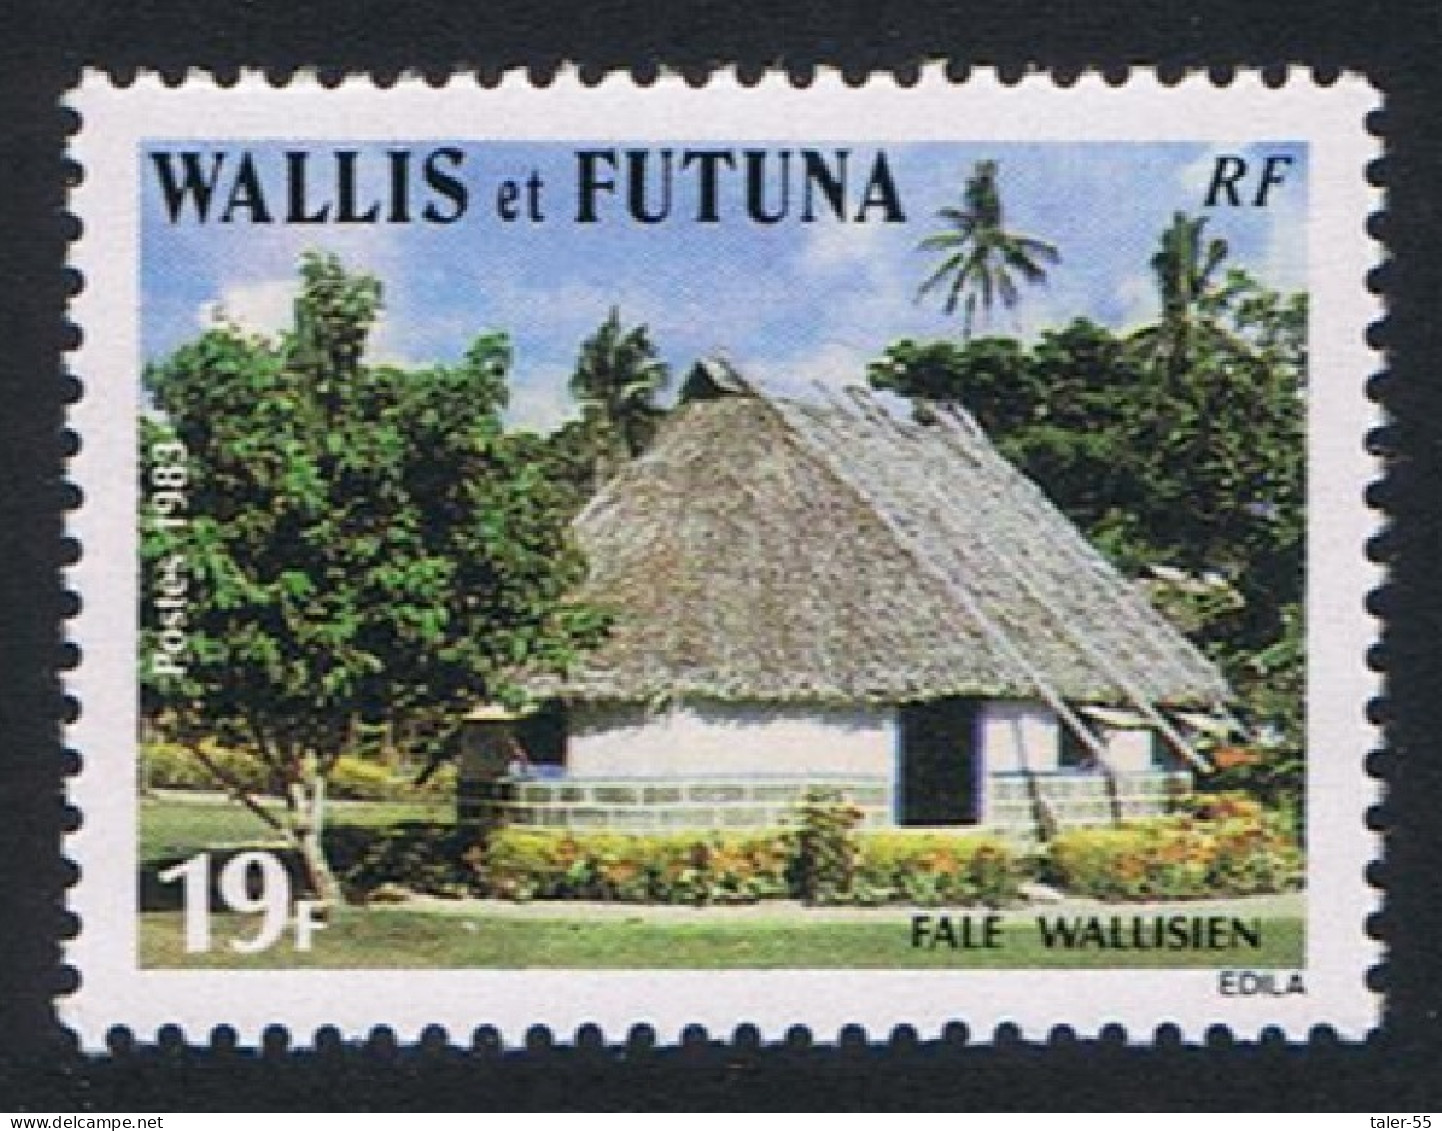 Wallis And Futuna Meeting House 1983 MNH SG#417 Sc#299 - Nuevos